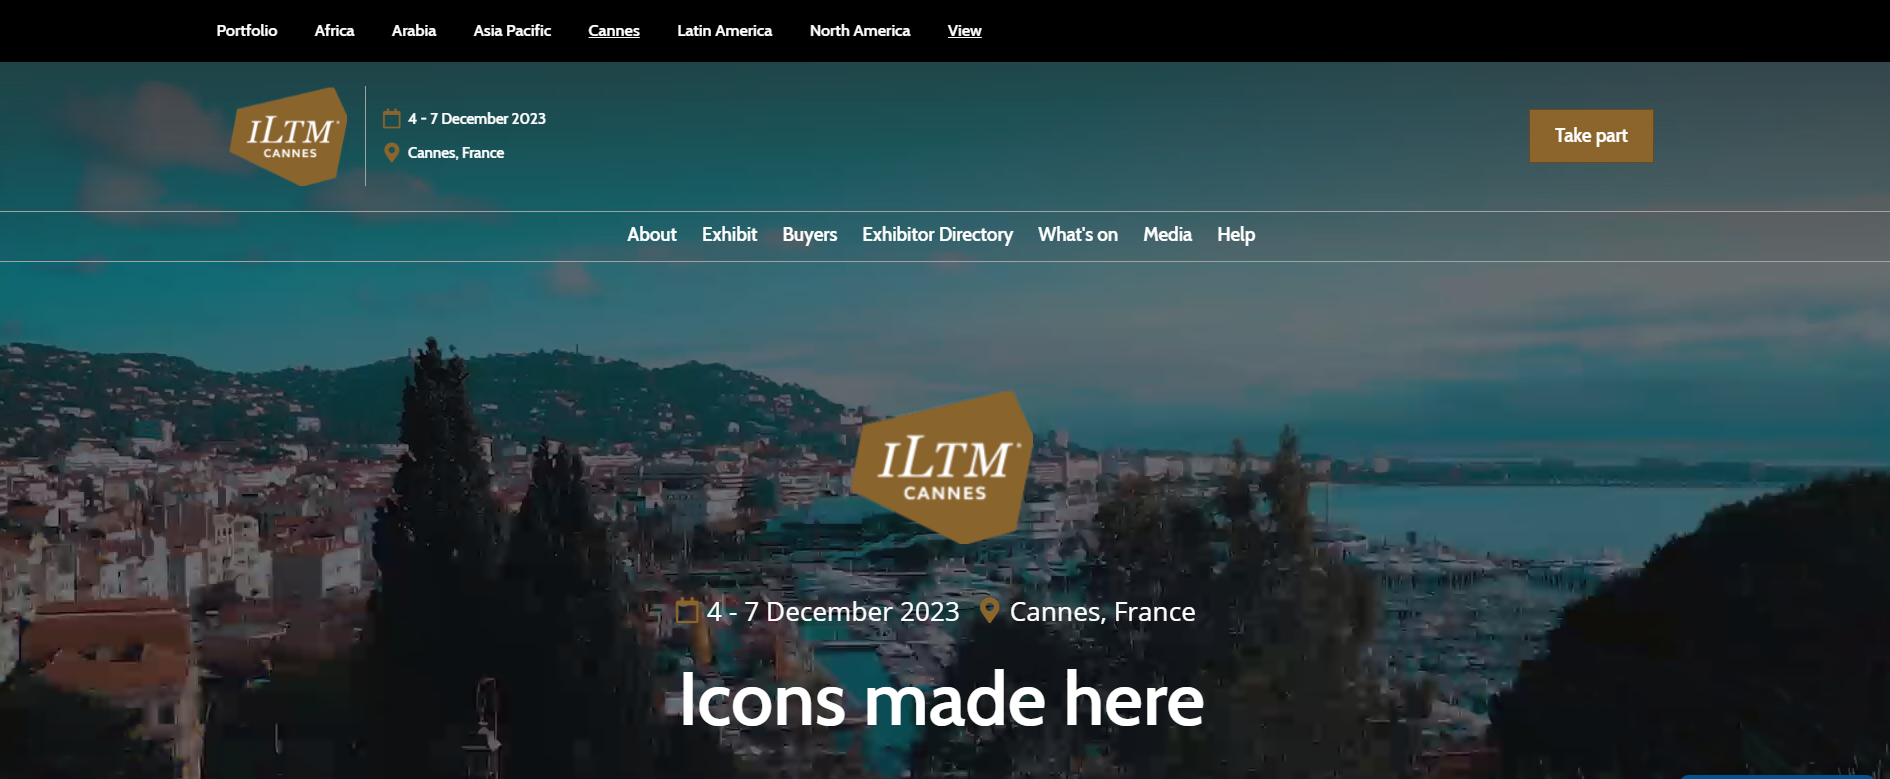 ILTM Cannes 2023